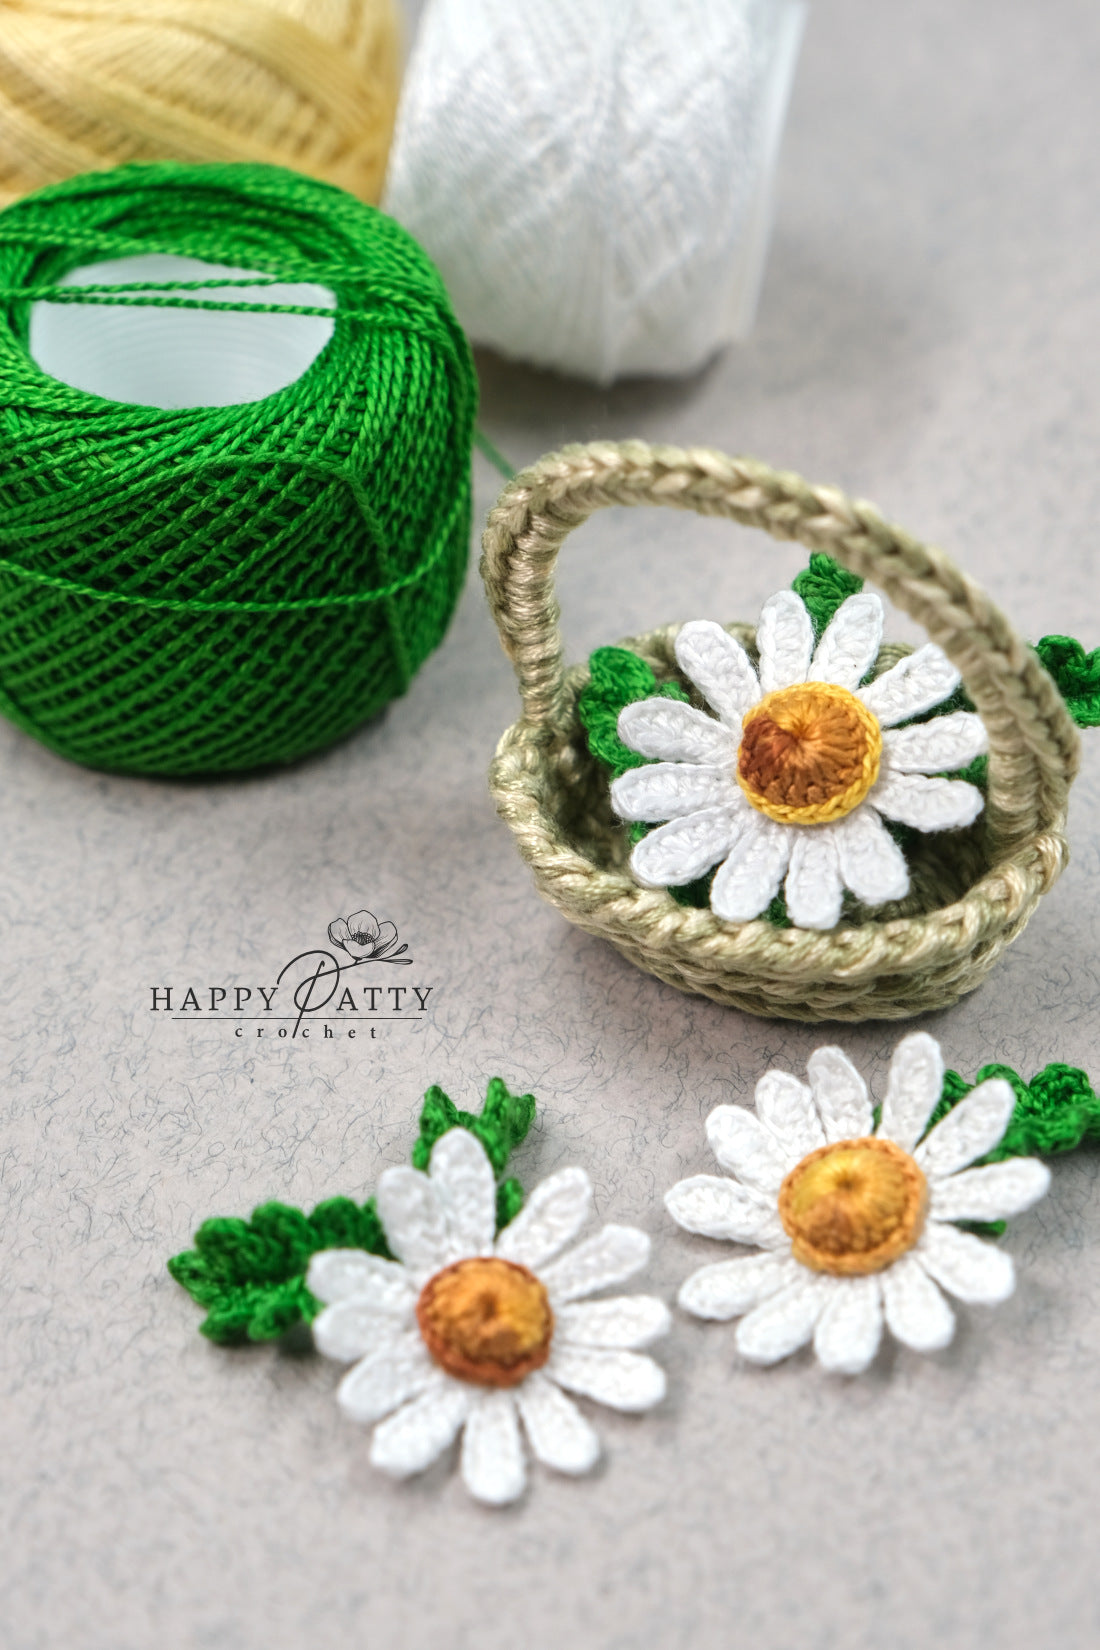 Mini Crochet Flower Appliques E-Book, Part 2 by Happy Patty Crochet